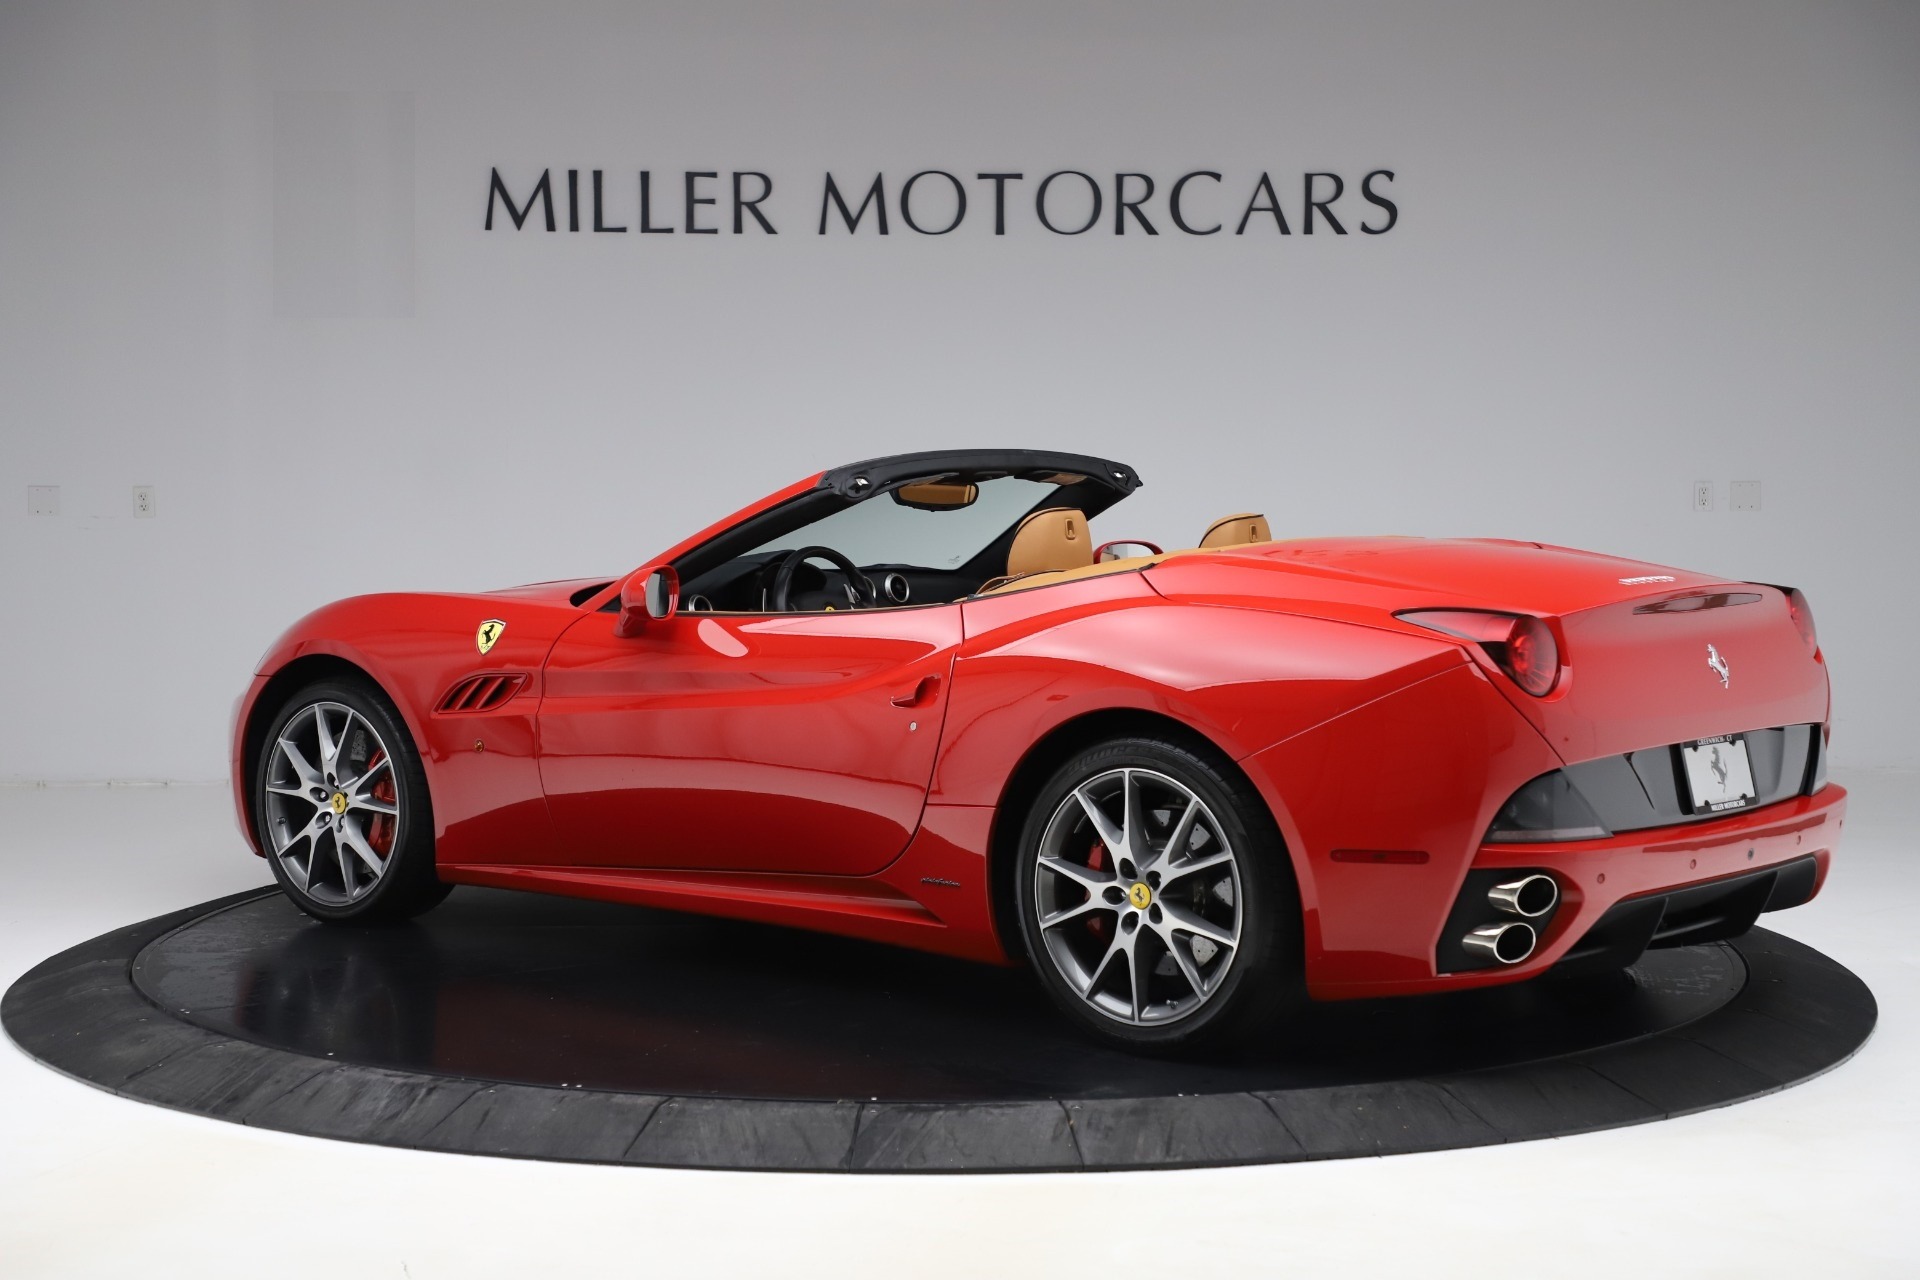 Pre Owned 13 Ferrari California 30 For Sale Miller Motorcars Stock 46a